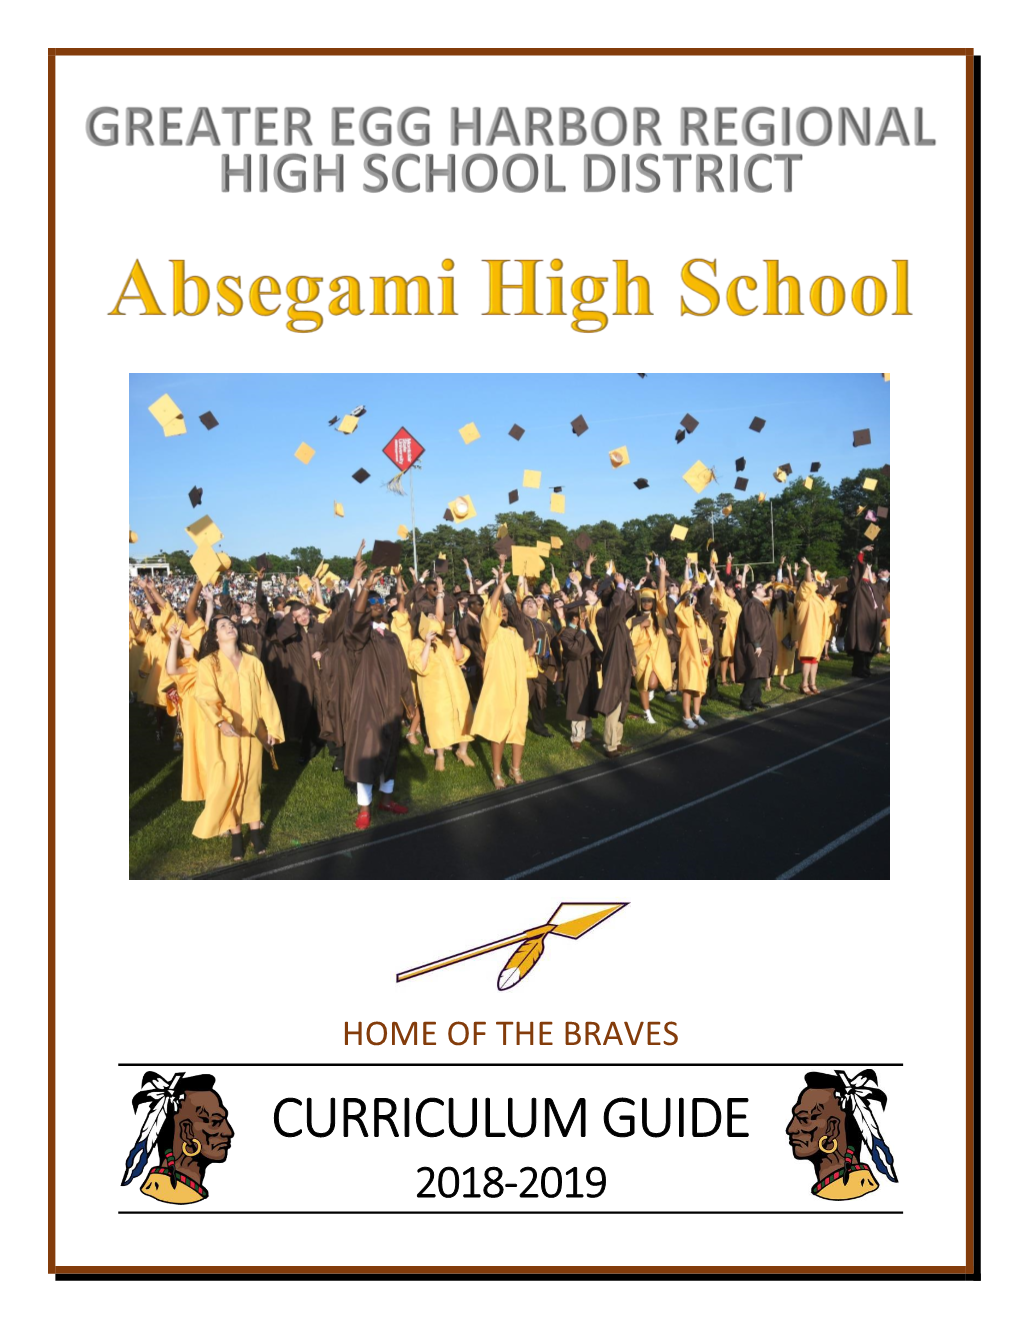 Absegami High School 201 South Wrangleboro Road Galloway, New Jersey 08205 609-652-1372 Fax 609-652-0139